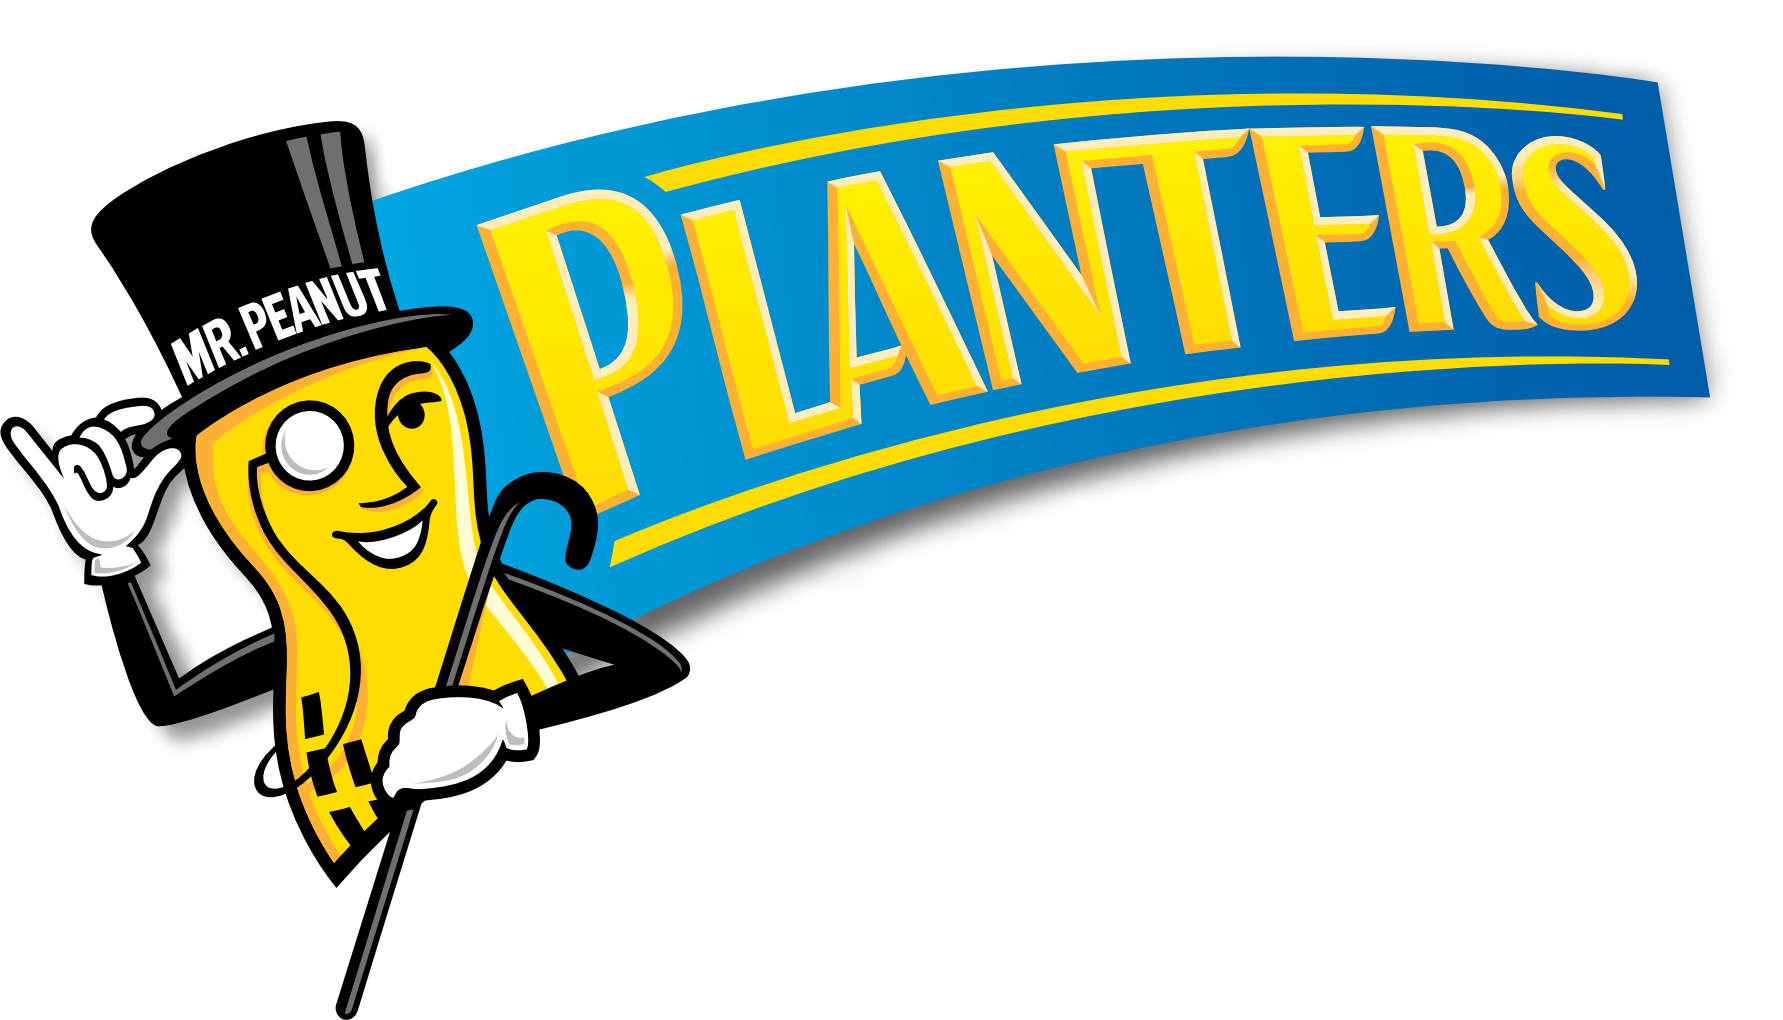 Krwn Logo - Planters Nut (1783x1020)